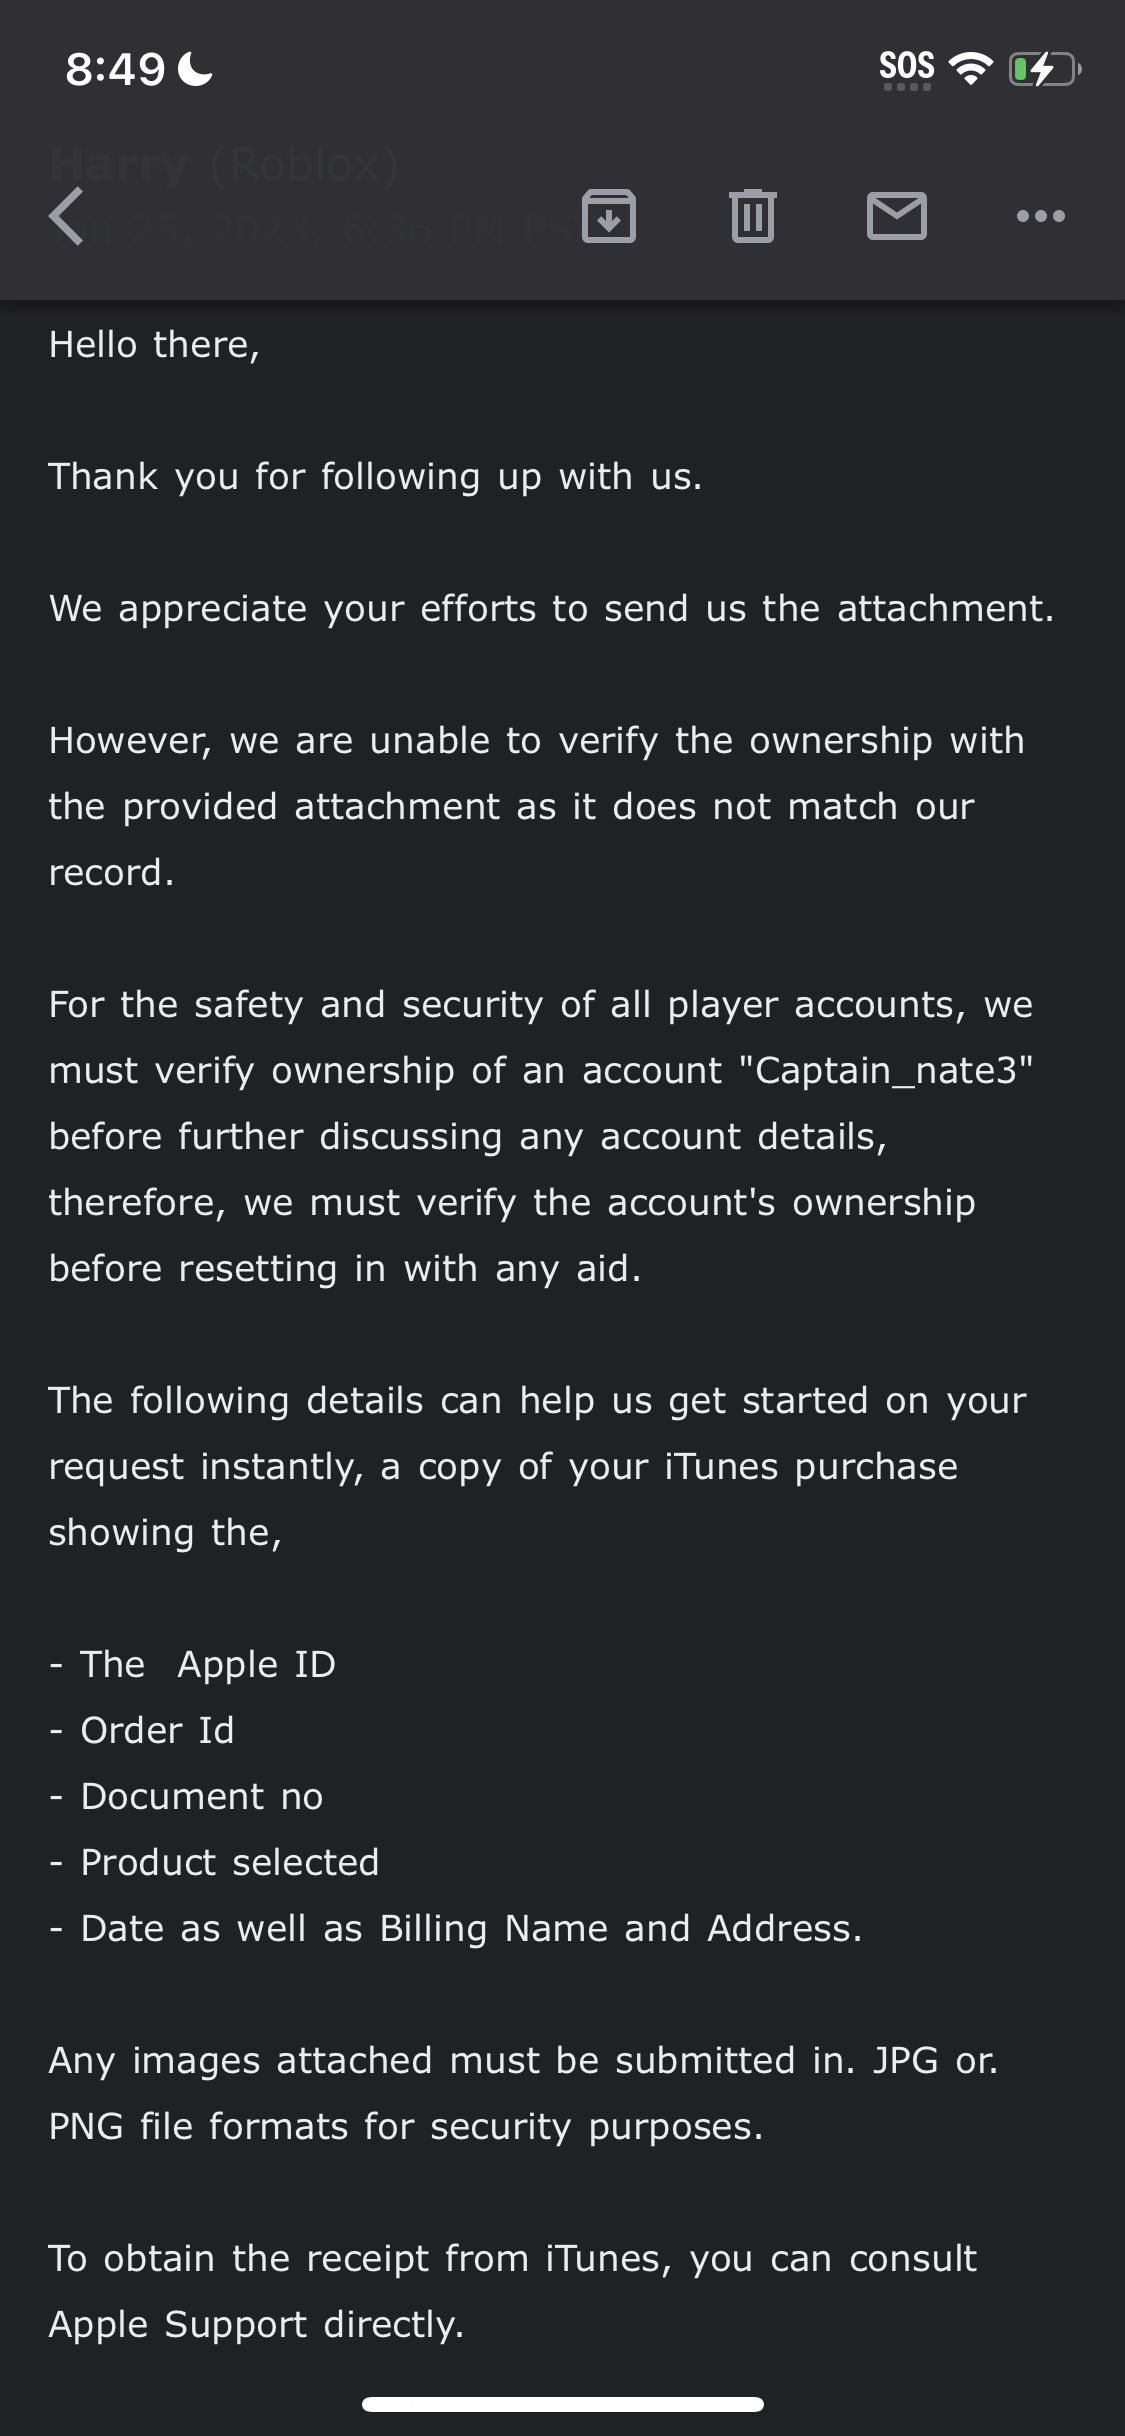 Roblox purchasing error - Apple Community